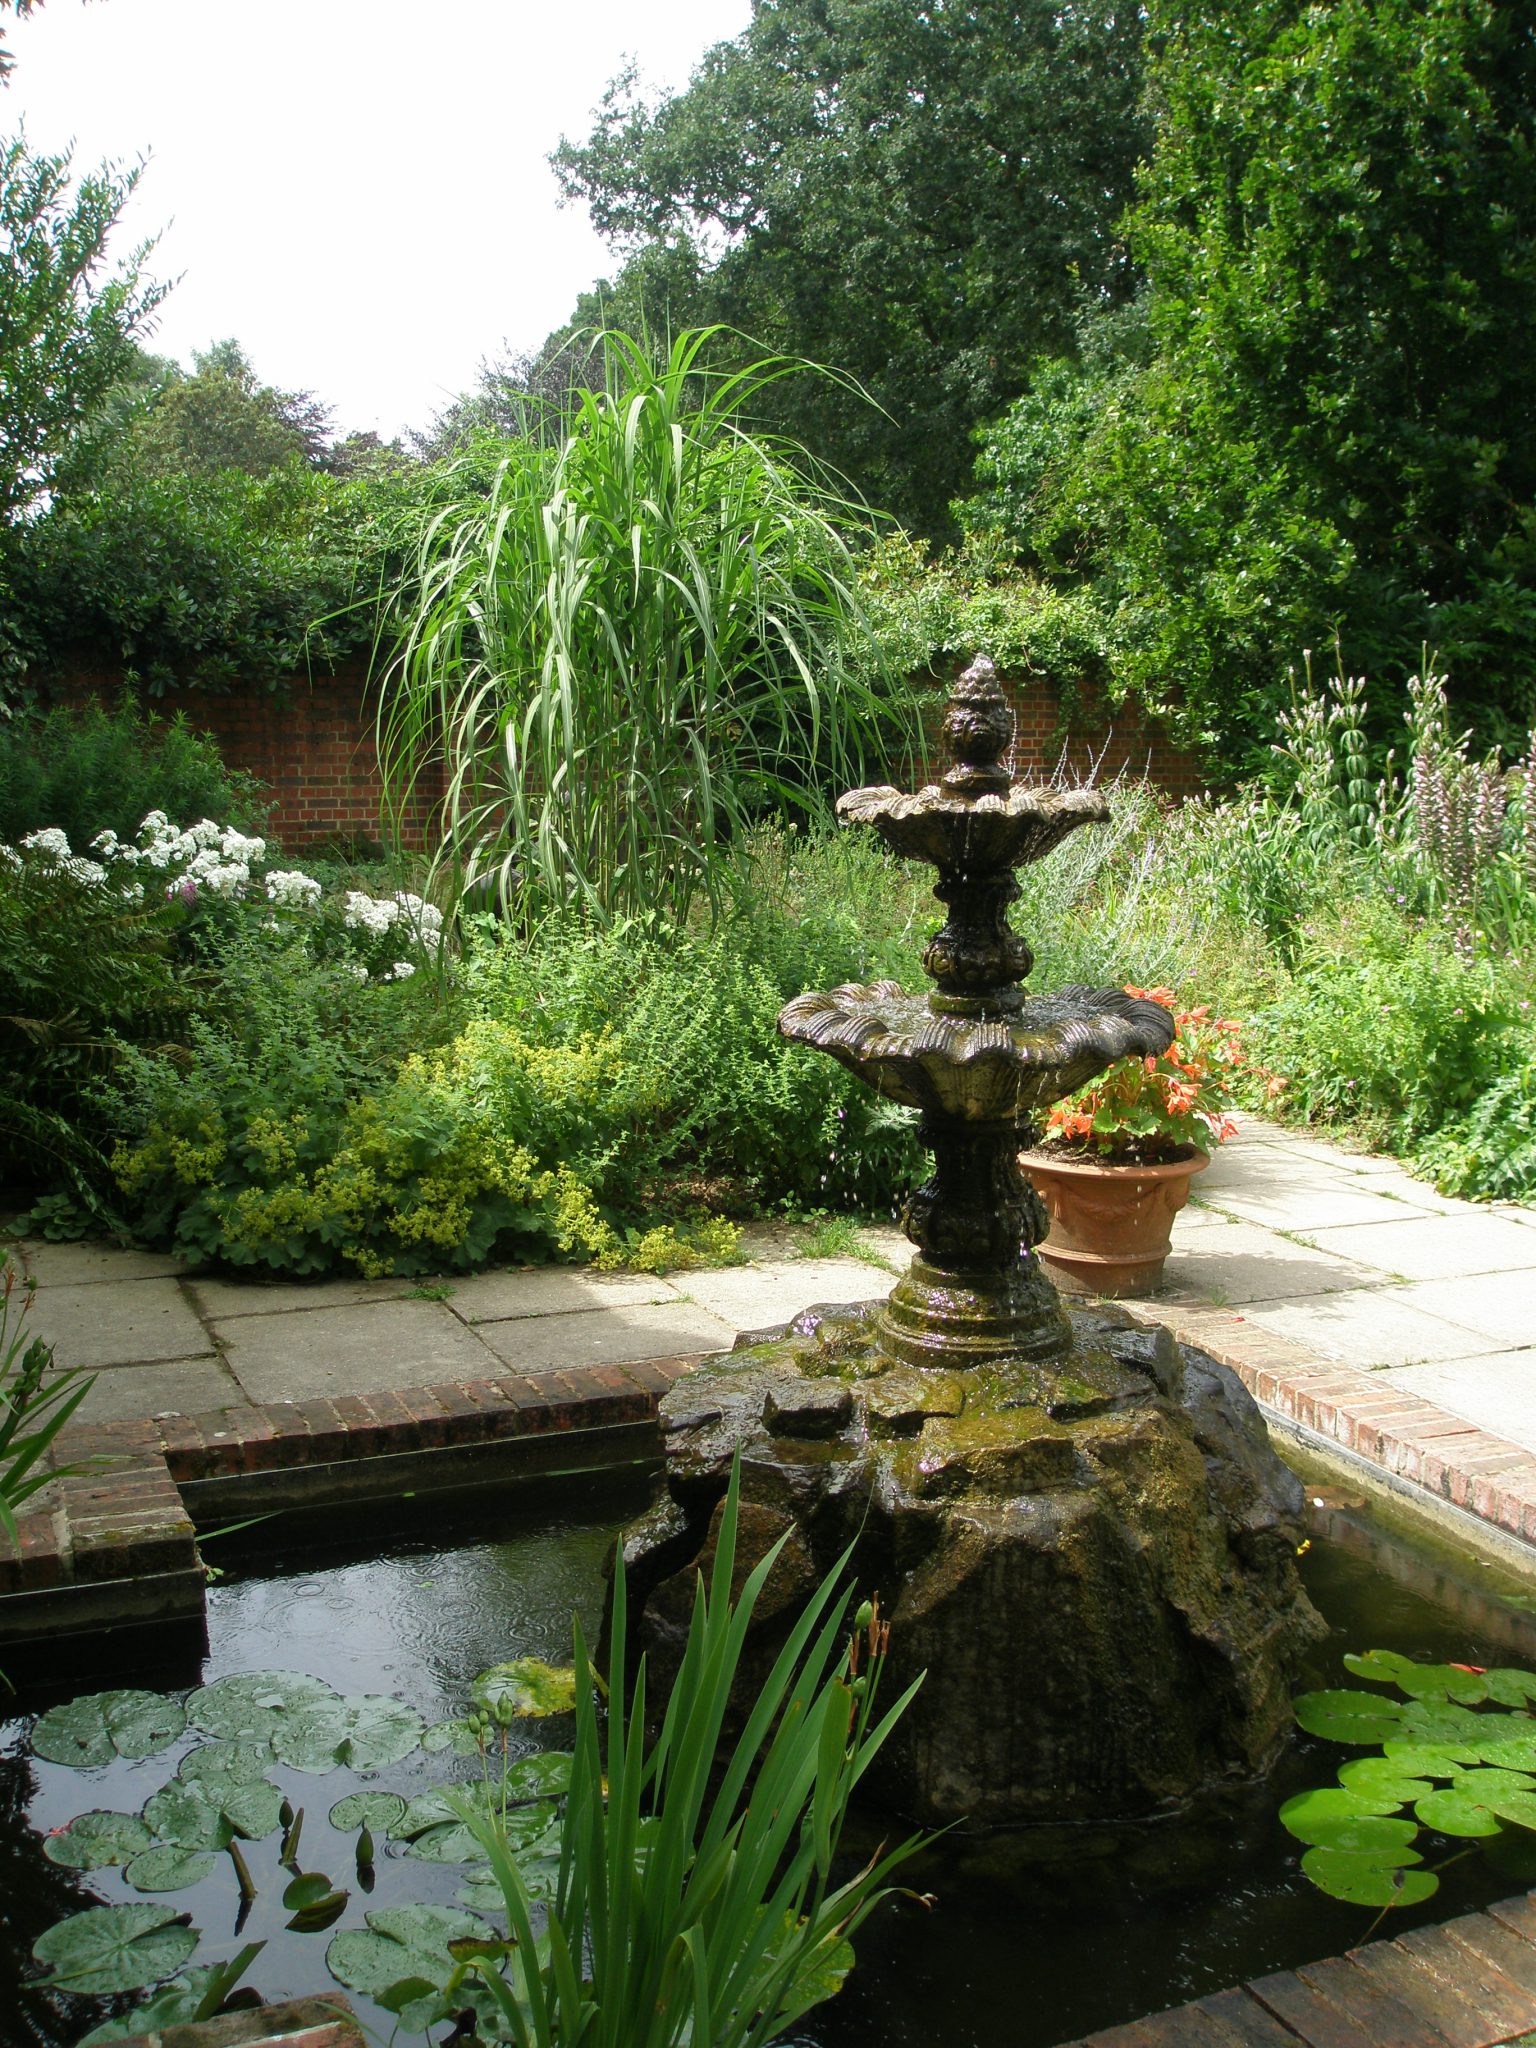 Fountain in the Italian Garden